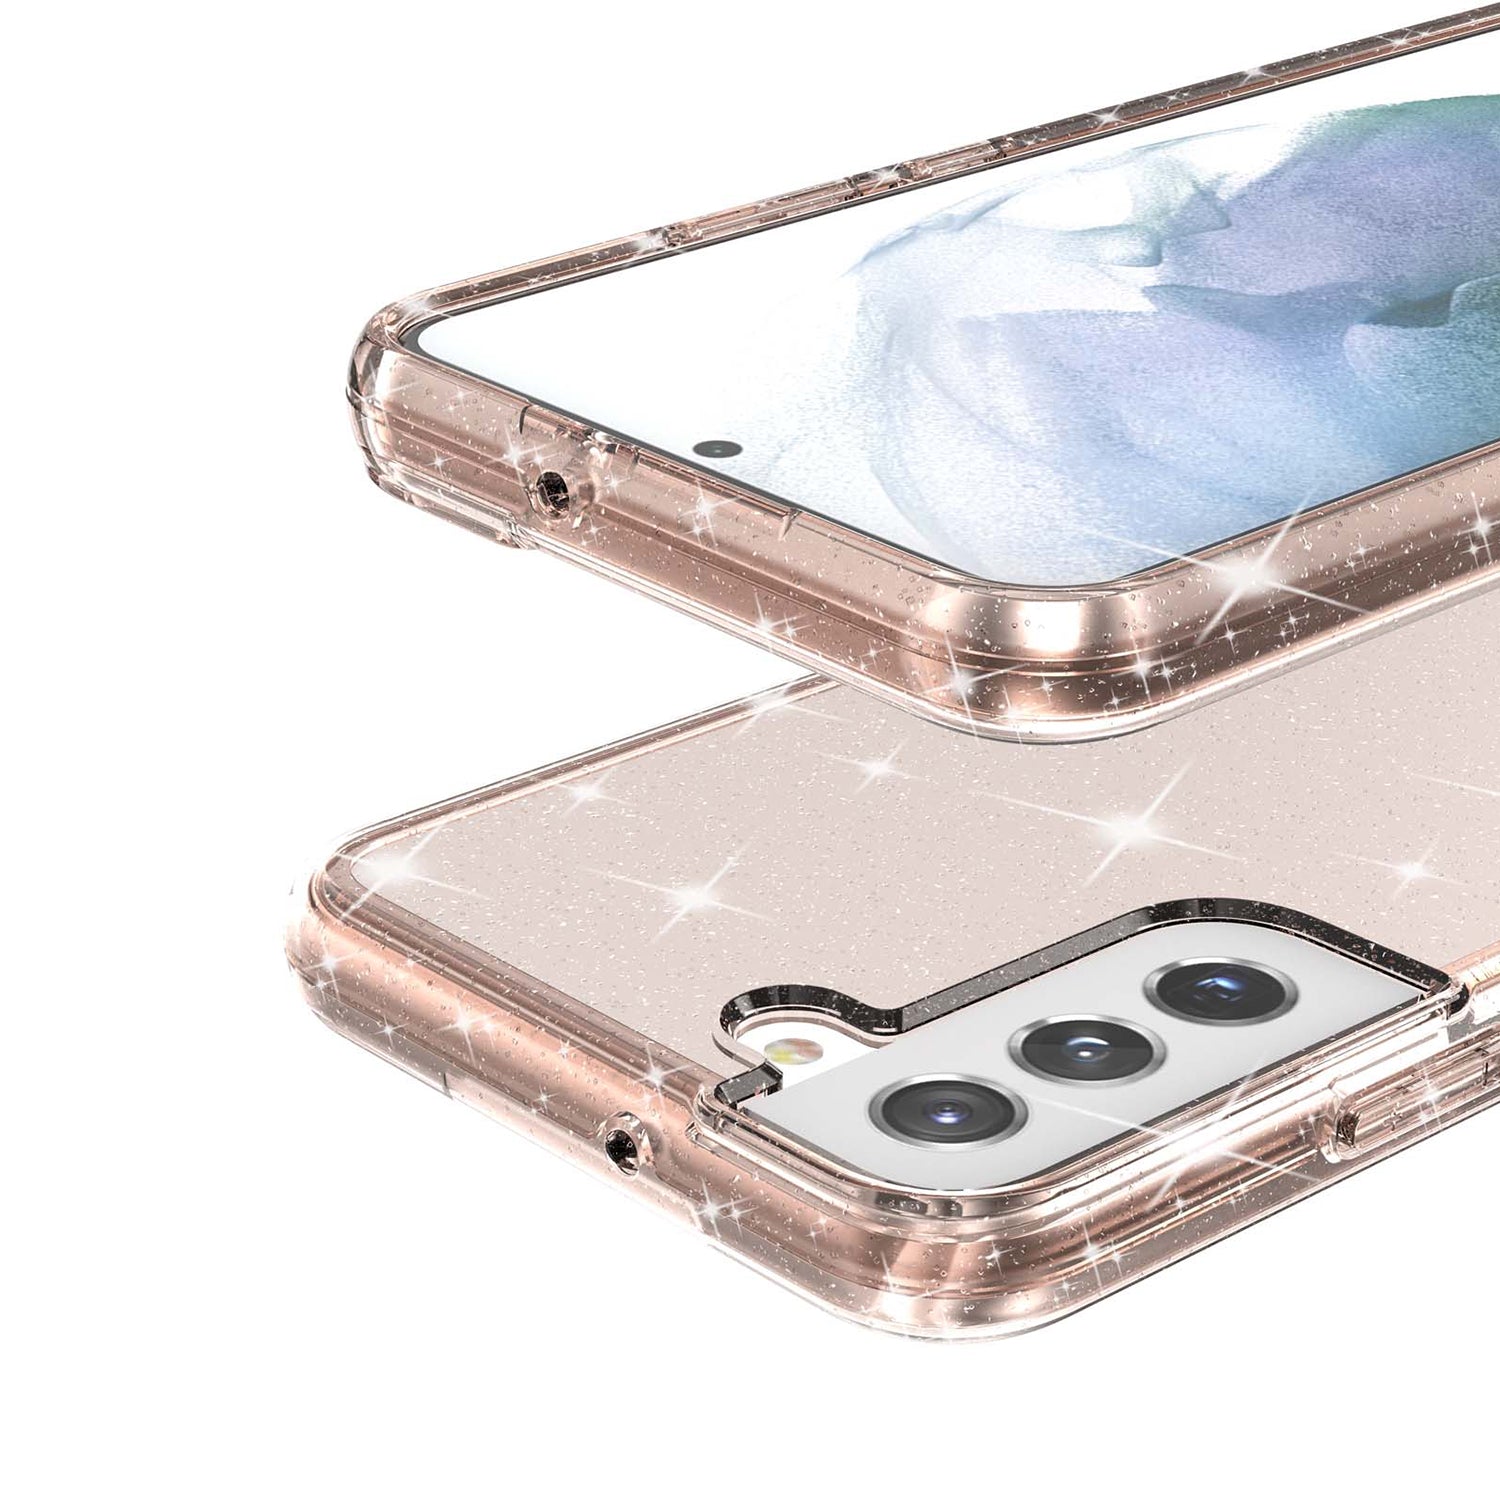 Samsung Galaxy S22 Shiny transparency Phone case